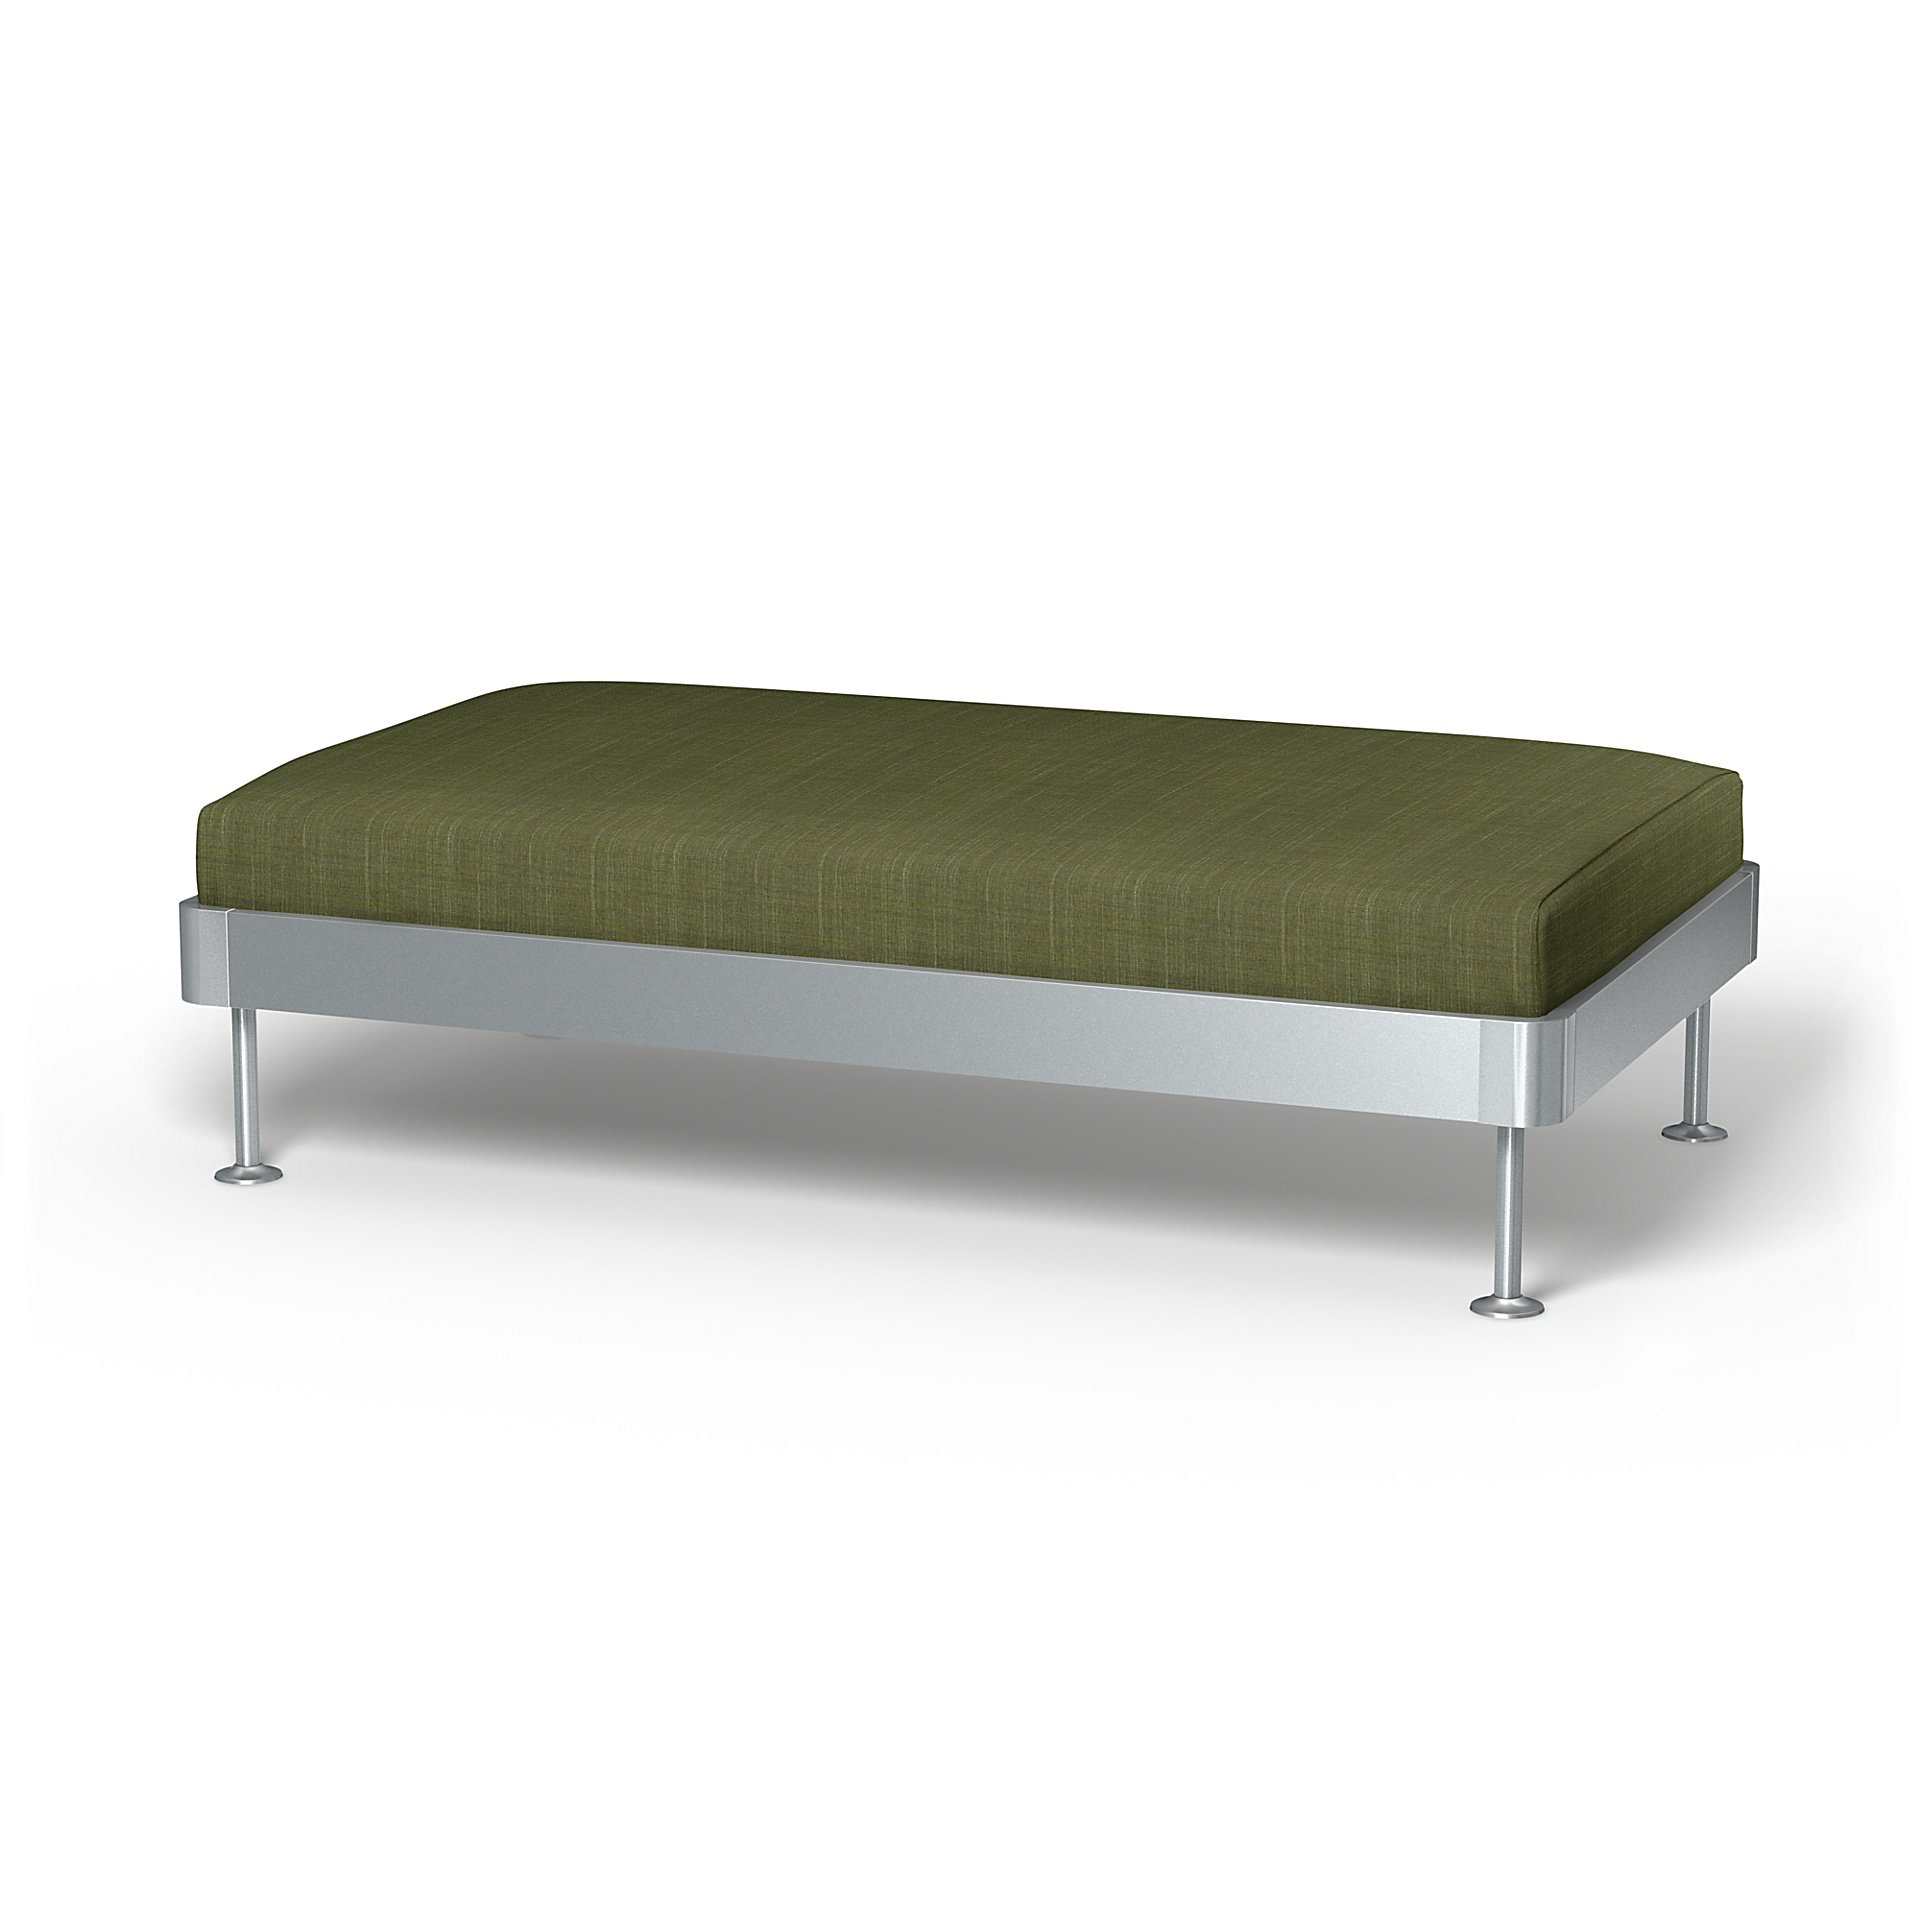 IKEA - Delaktig 2 Seat Platform Cover, Moss Green, Boucle & Texture - Bemz